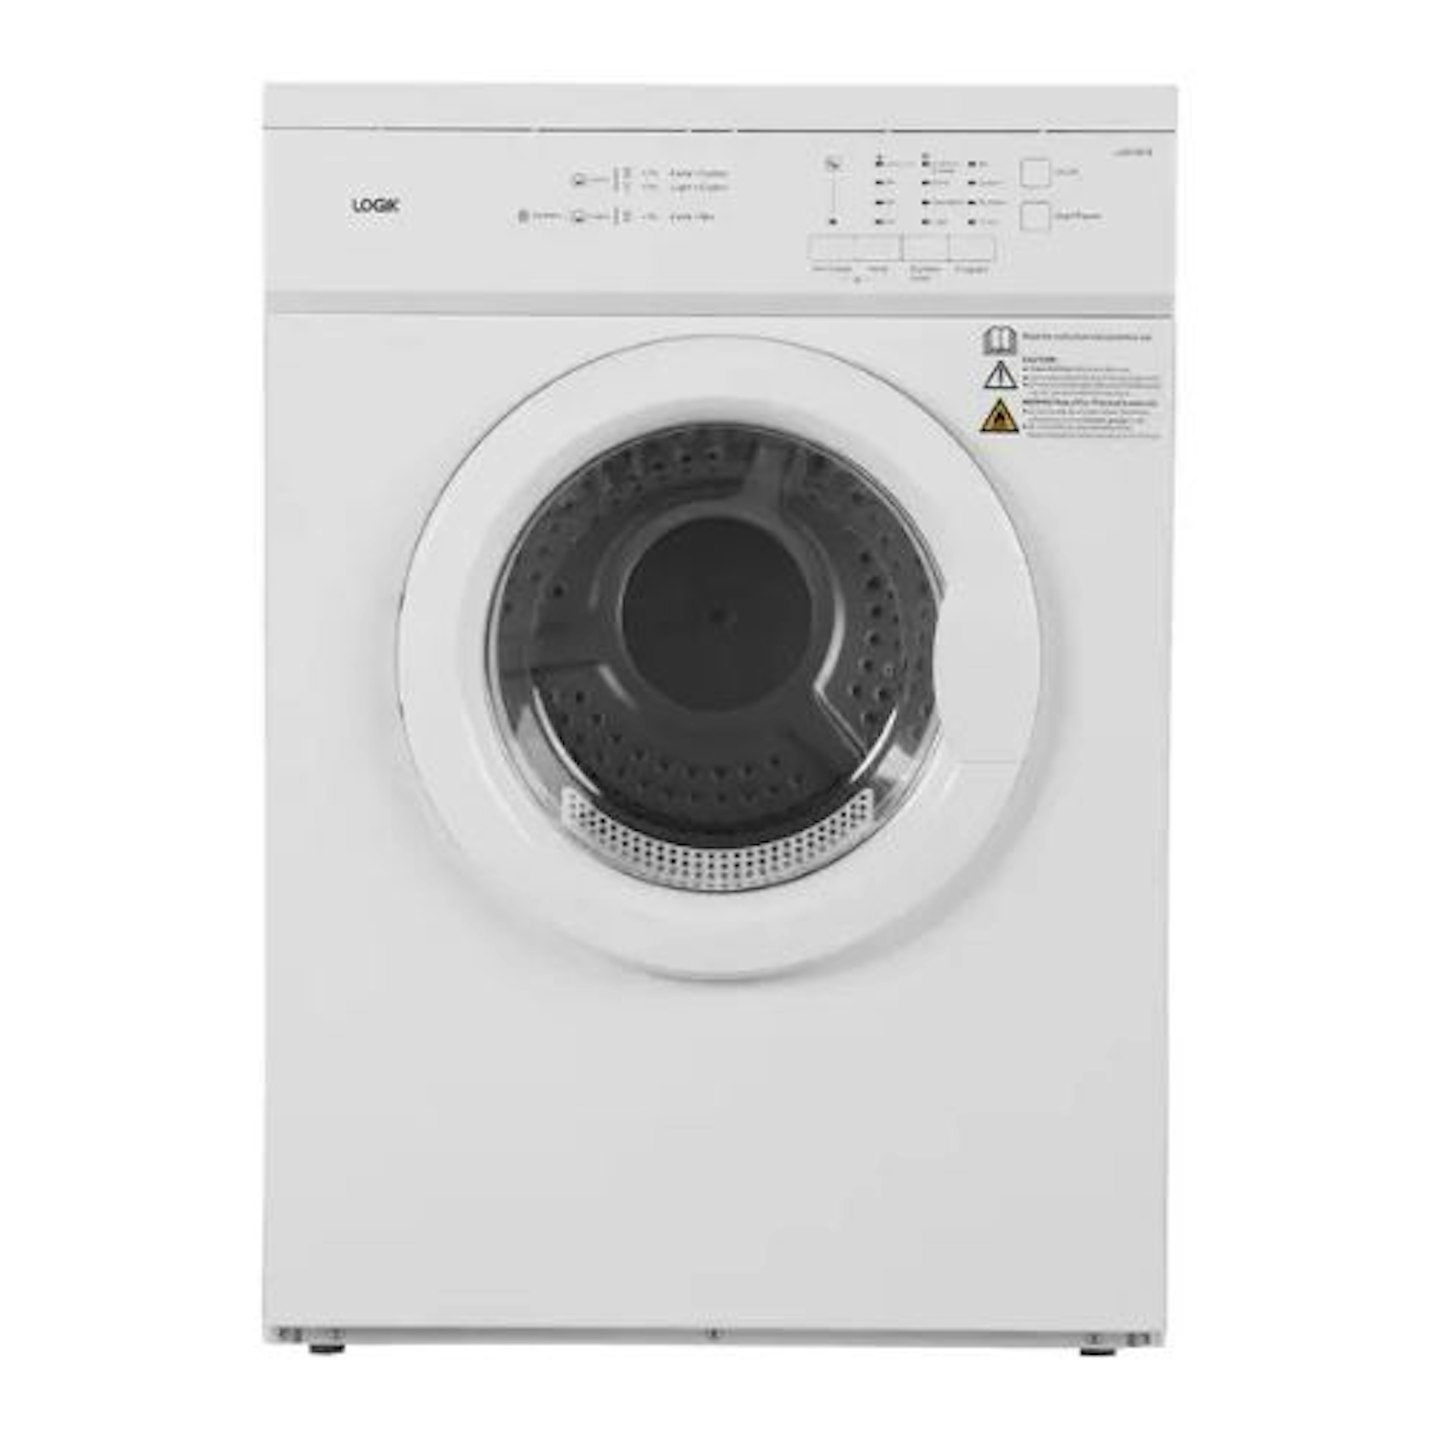 LOGIK LVD7W18 Dryer in White